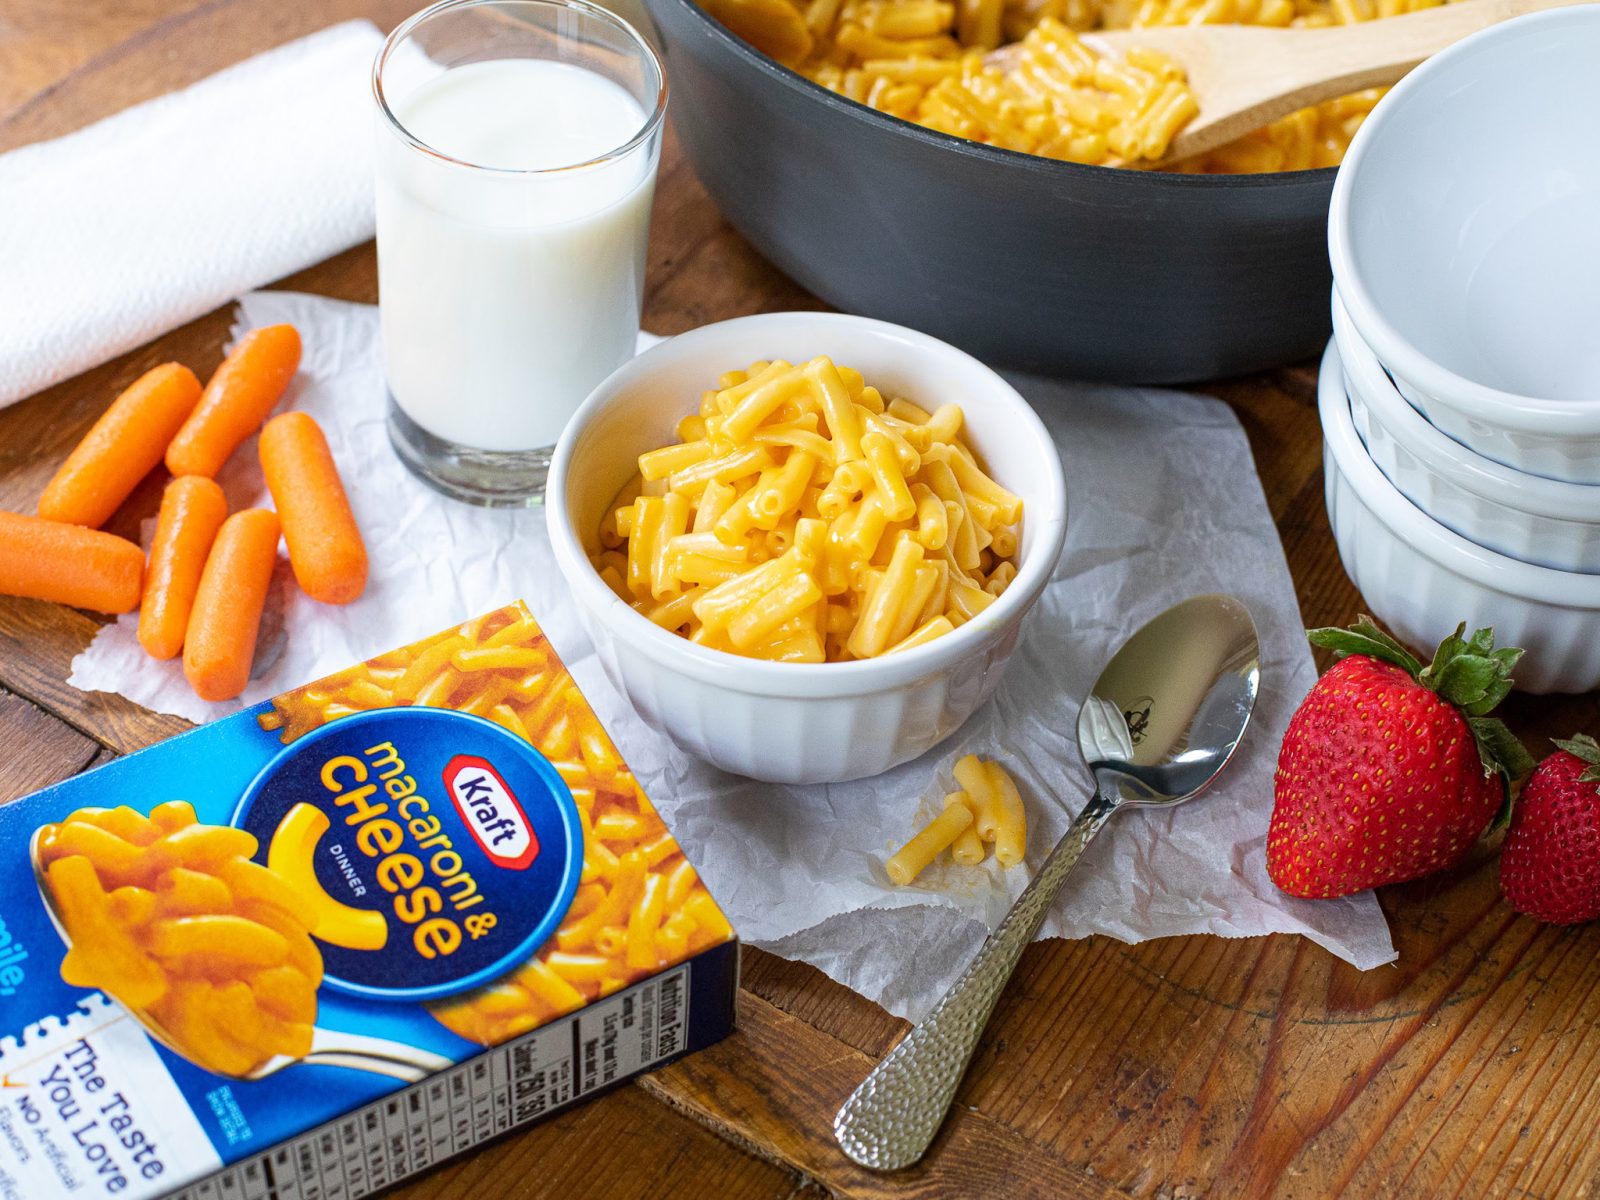 Kraft Macaroni & Cheese As Low As 47¢ At Publix